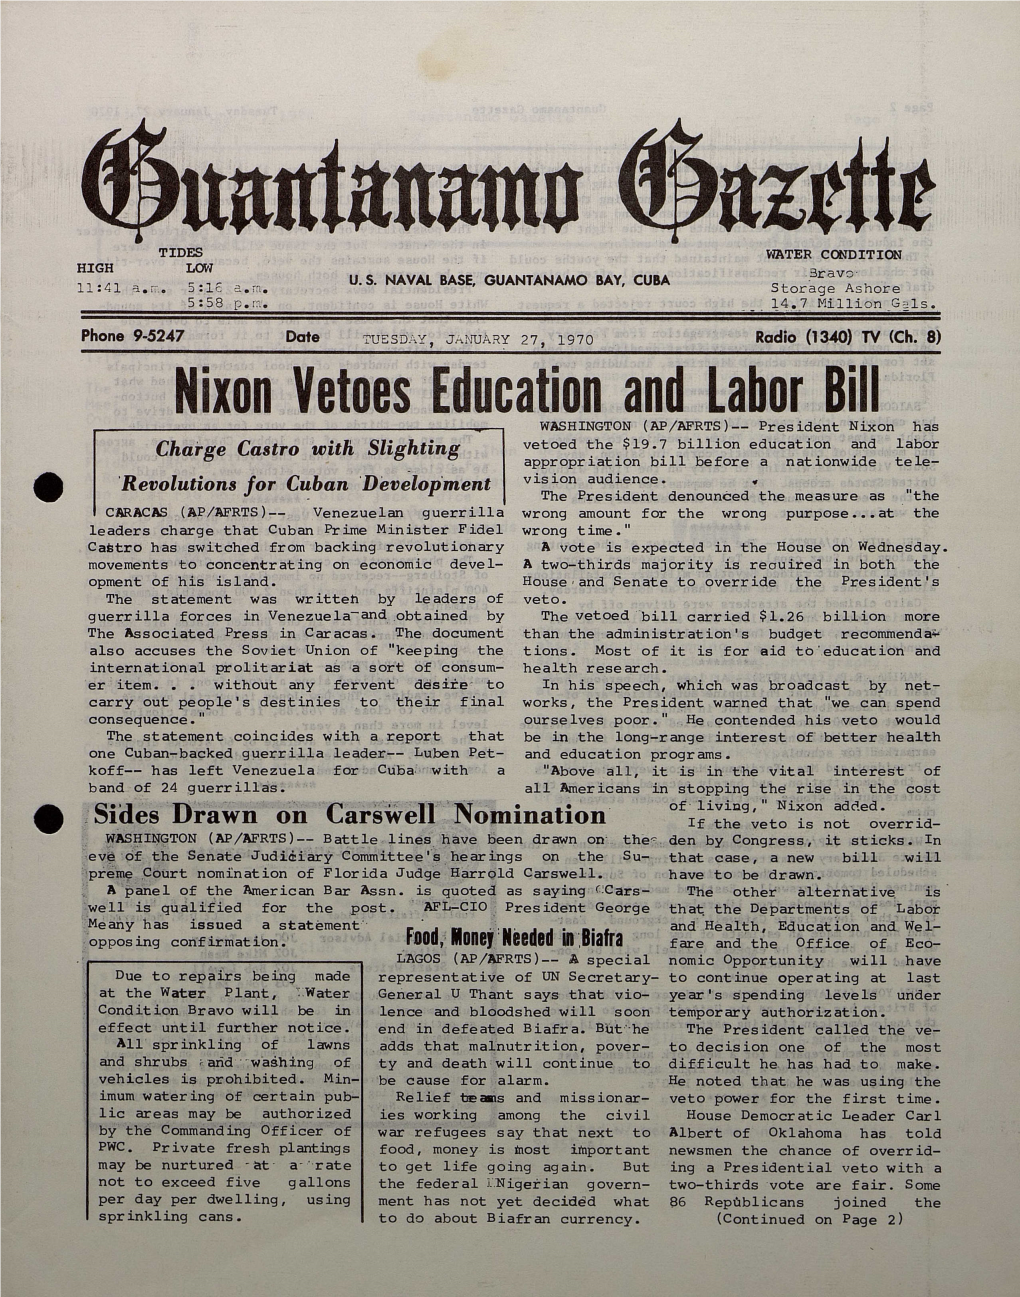 Nixon Vetoes Education and Labor Bill